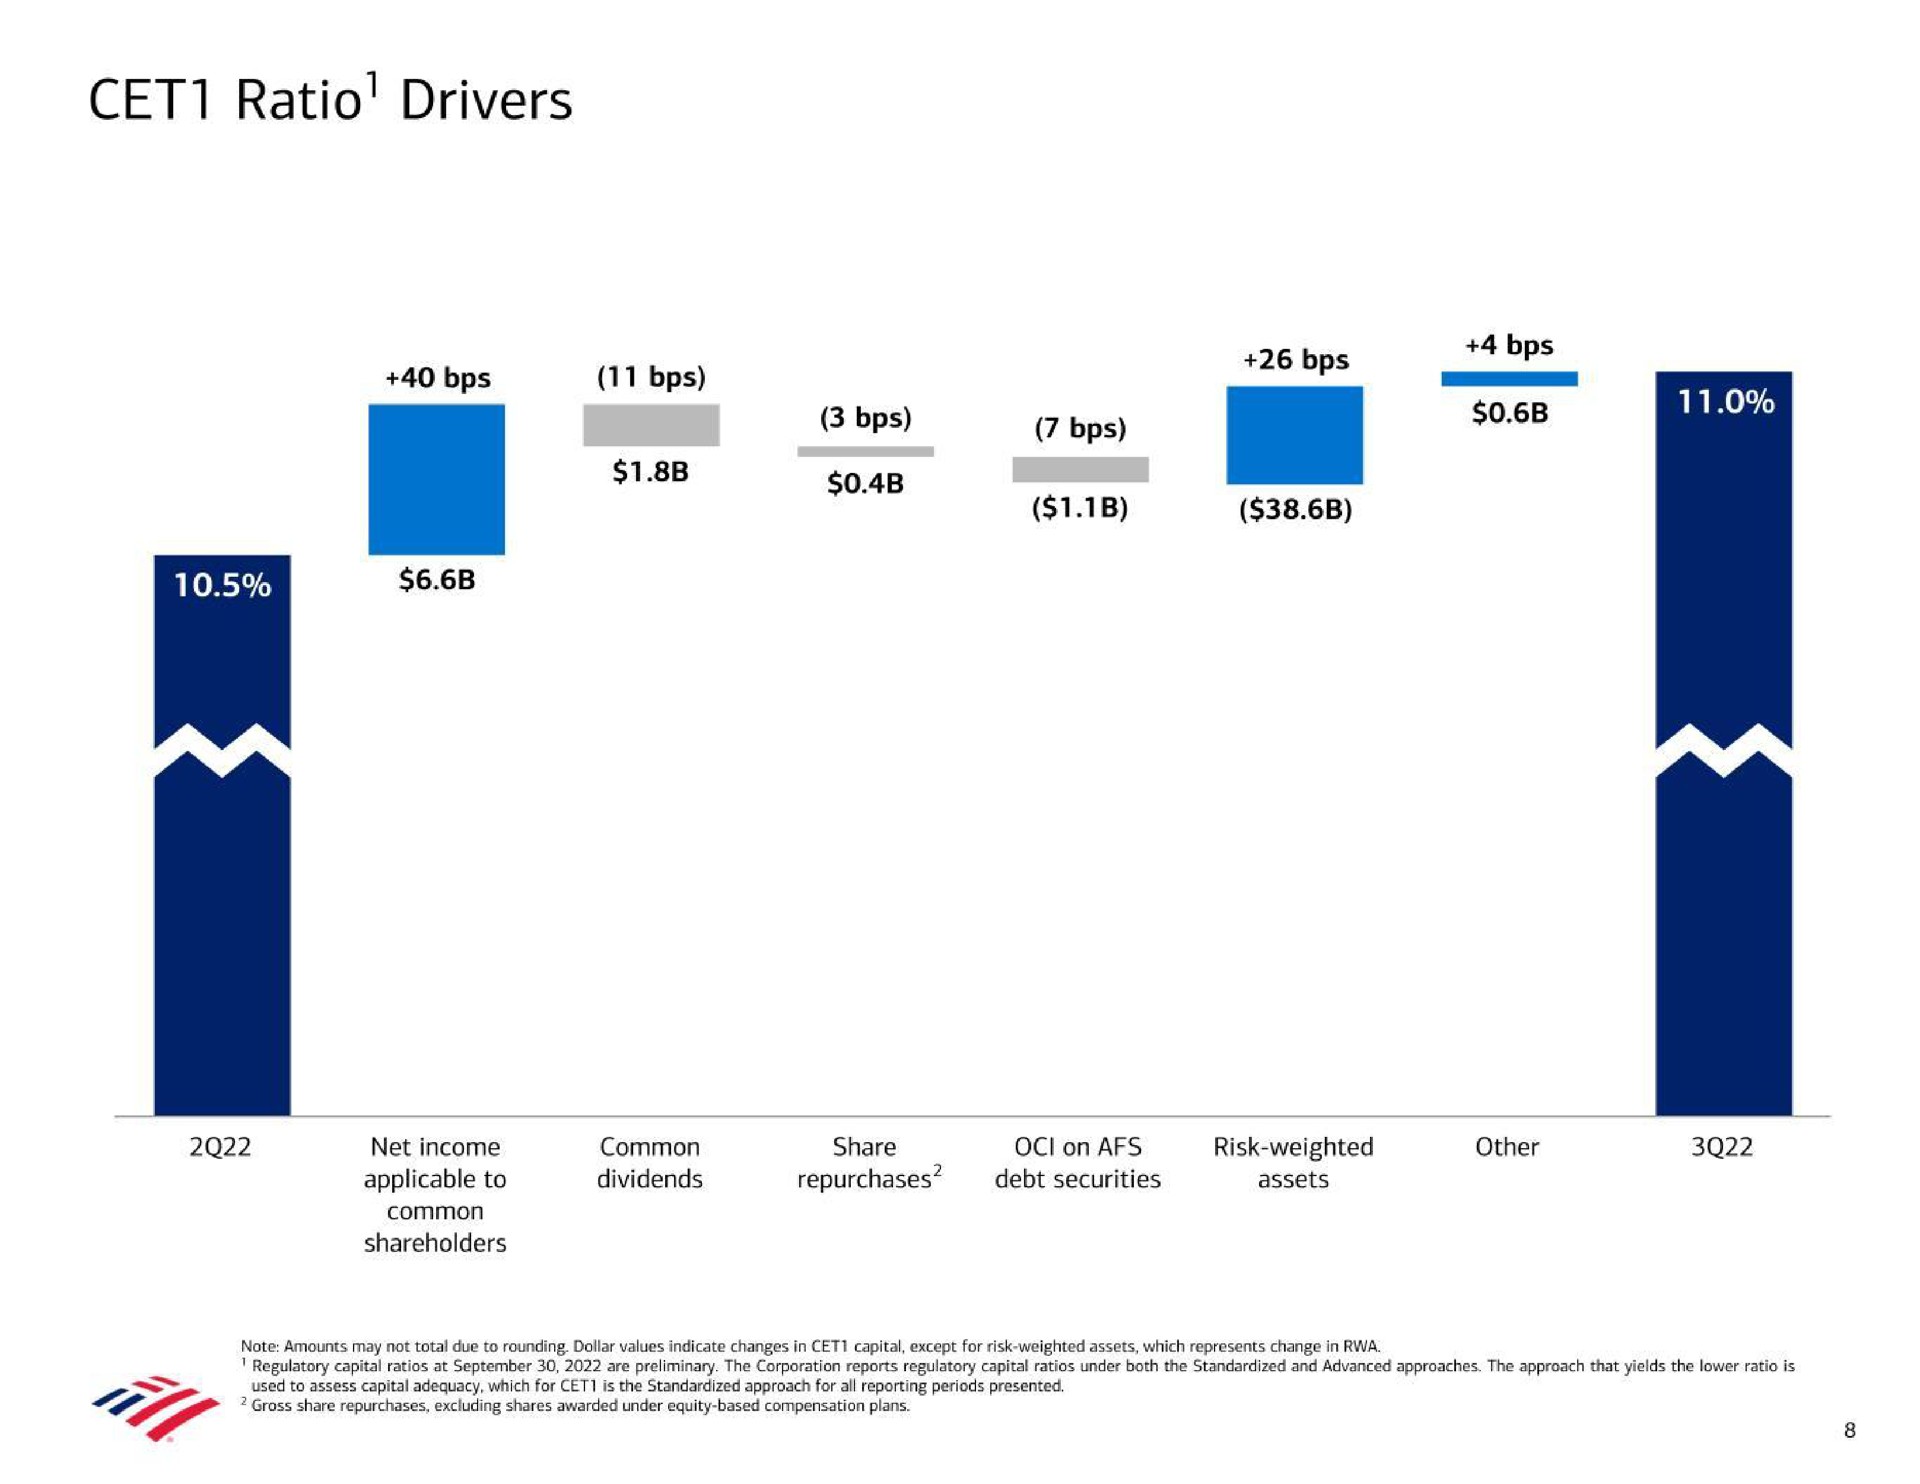 ratio drivers | Bank of America